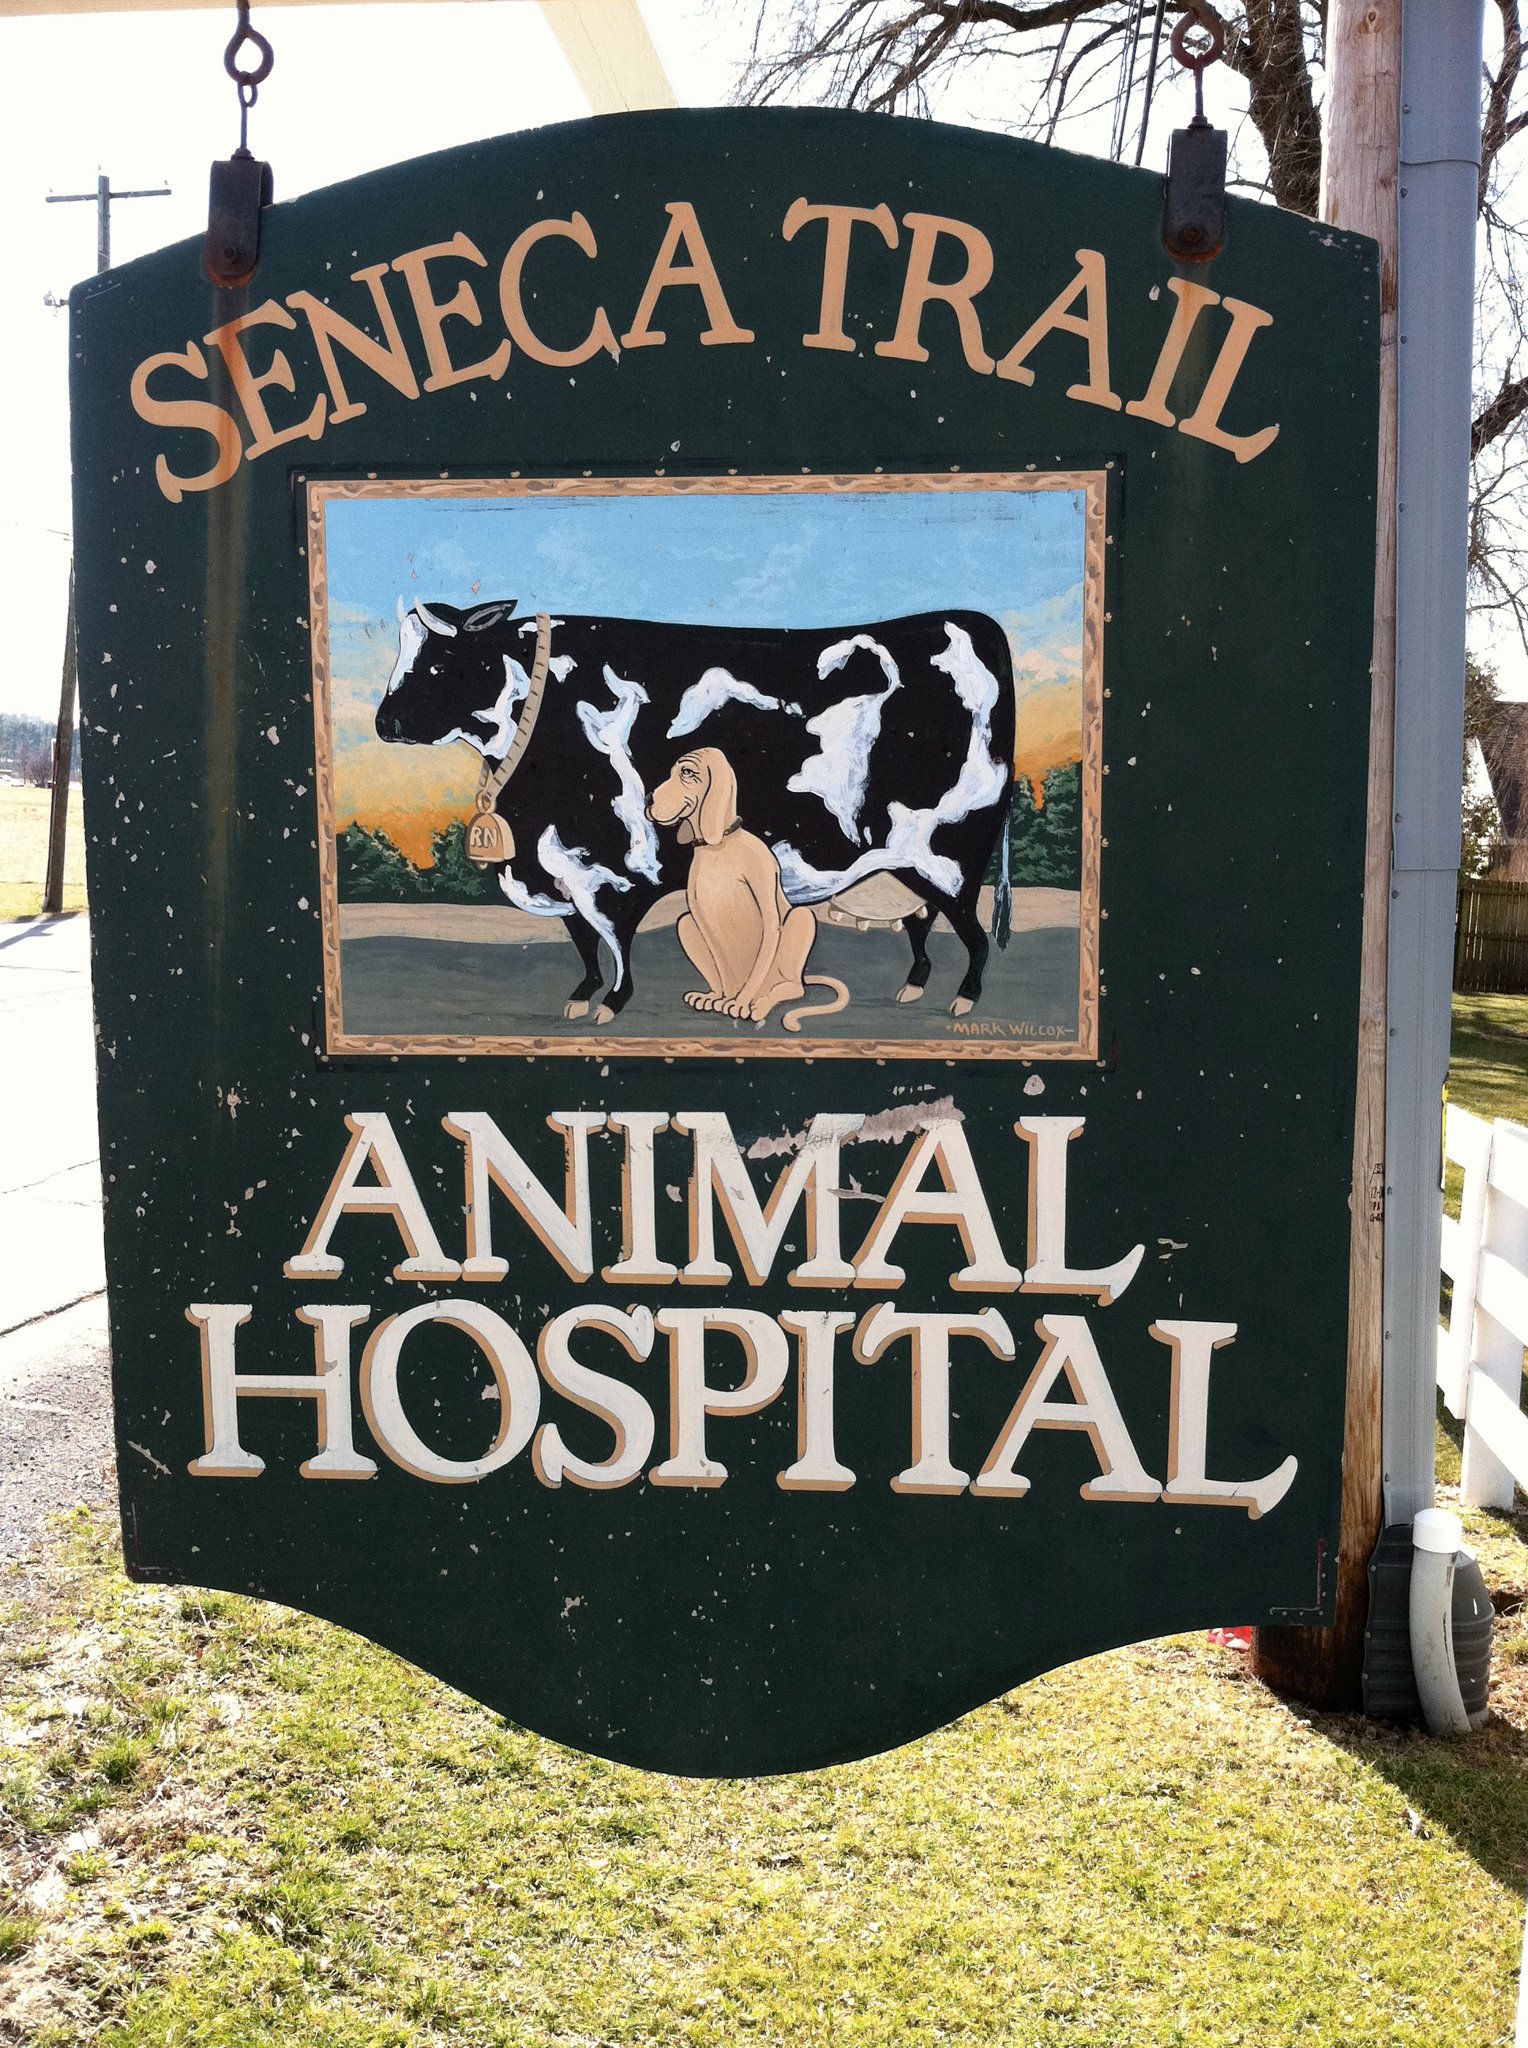 Seneca Trail Animal Hospital sign